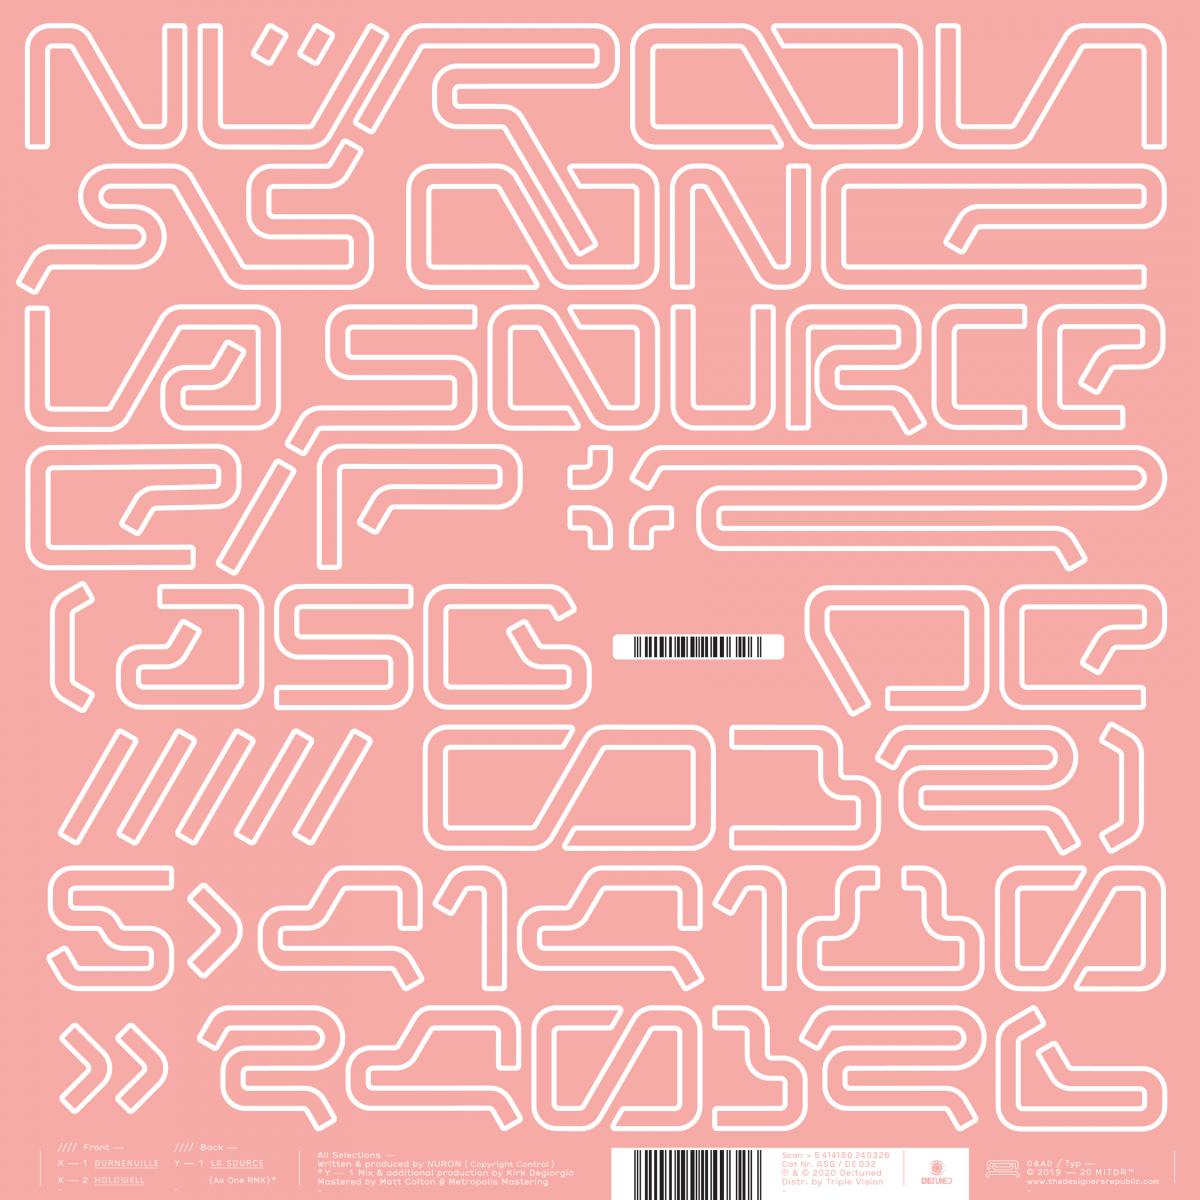 Nuron & As One/LA SOURCE EP 02 12"